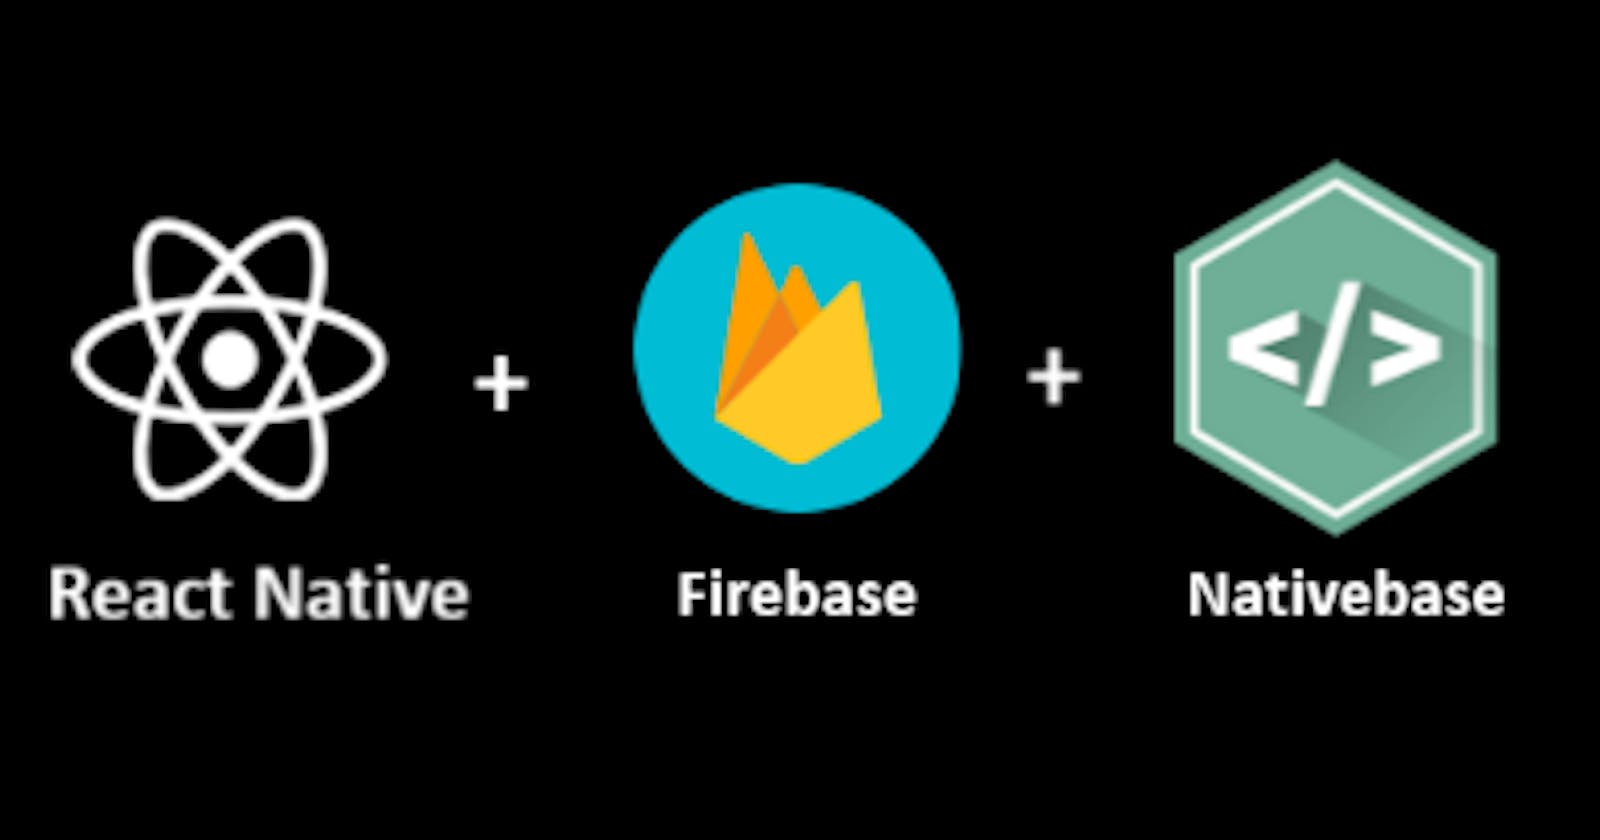 Simple login system using React Native, Firebase and Nativebase